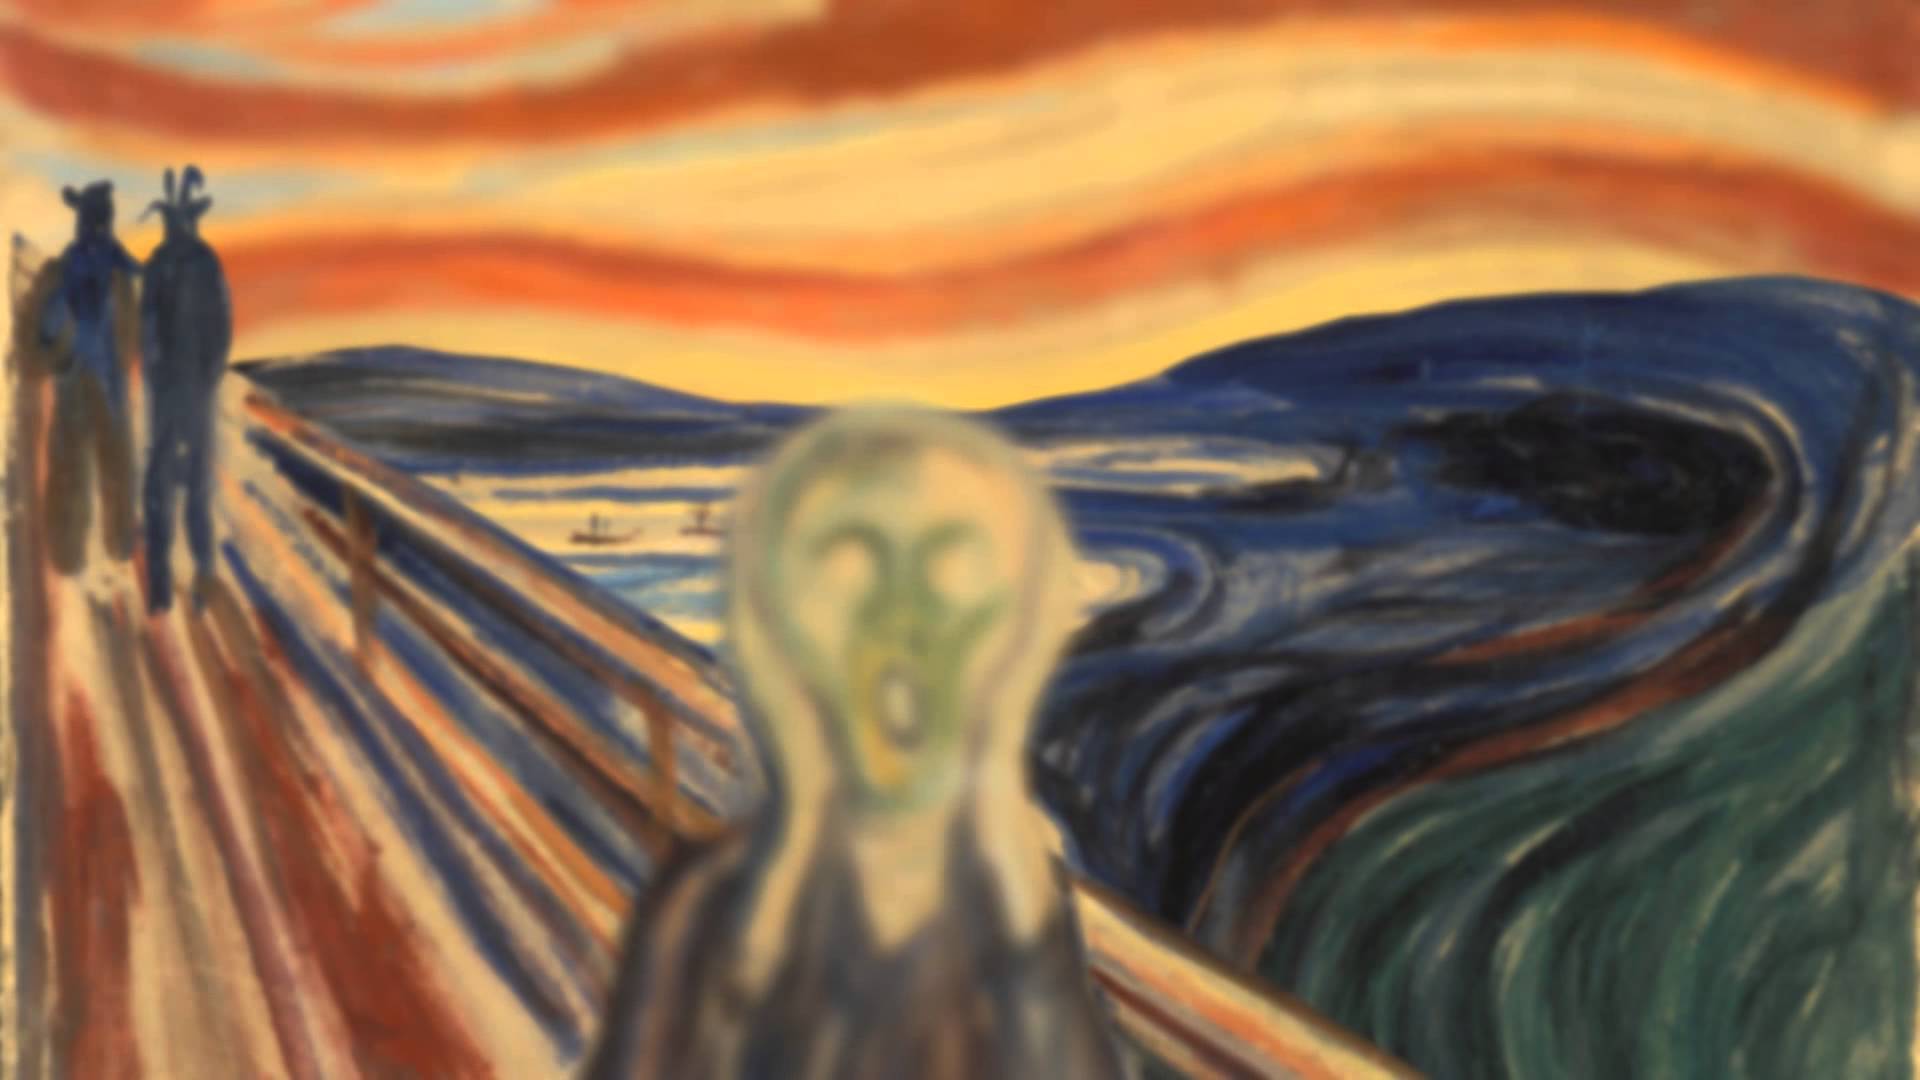 Parallax Artwork Edvard Munch - The Scream - YouTube